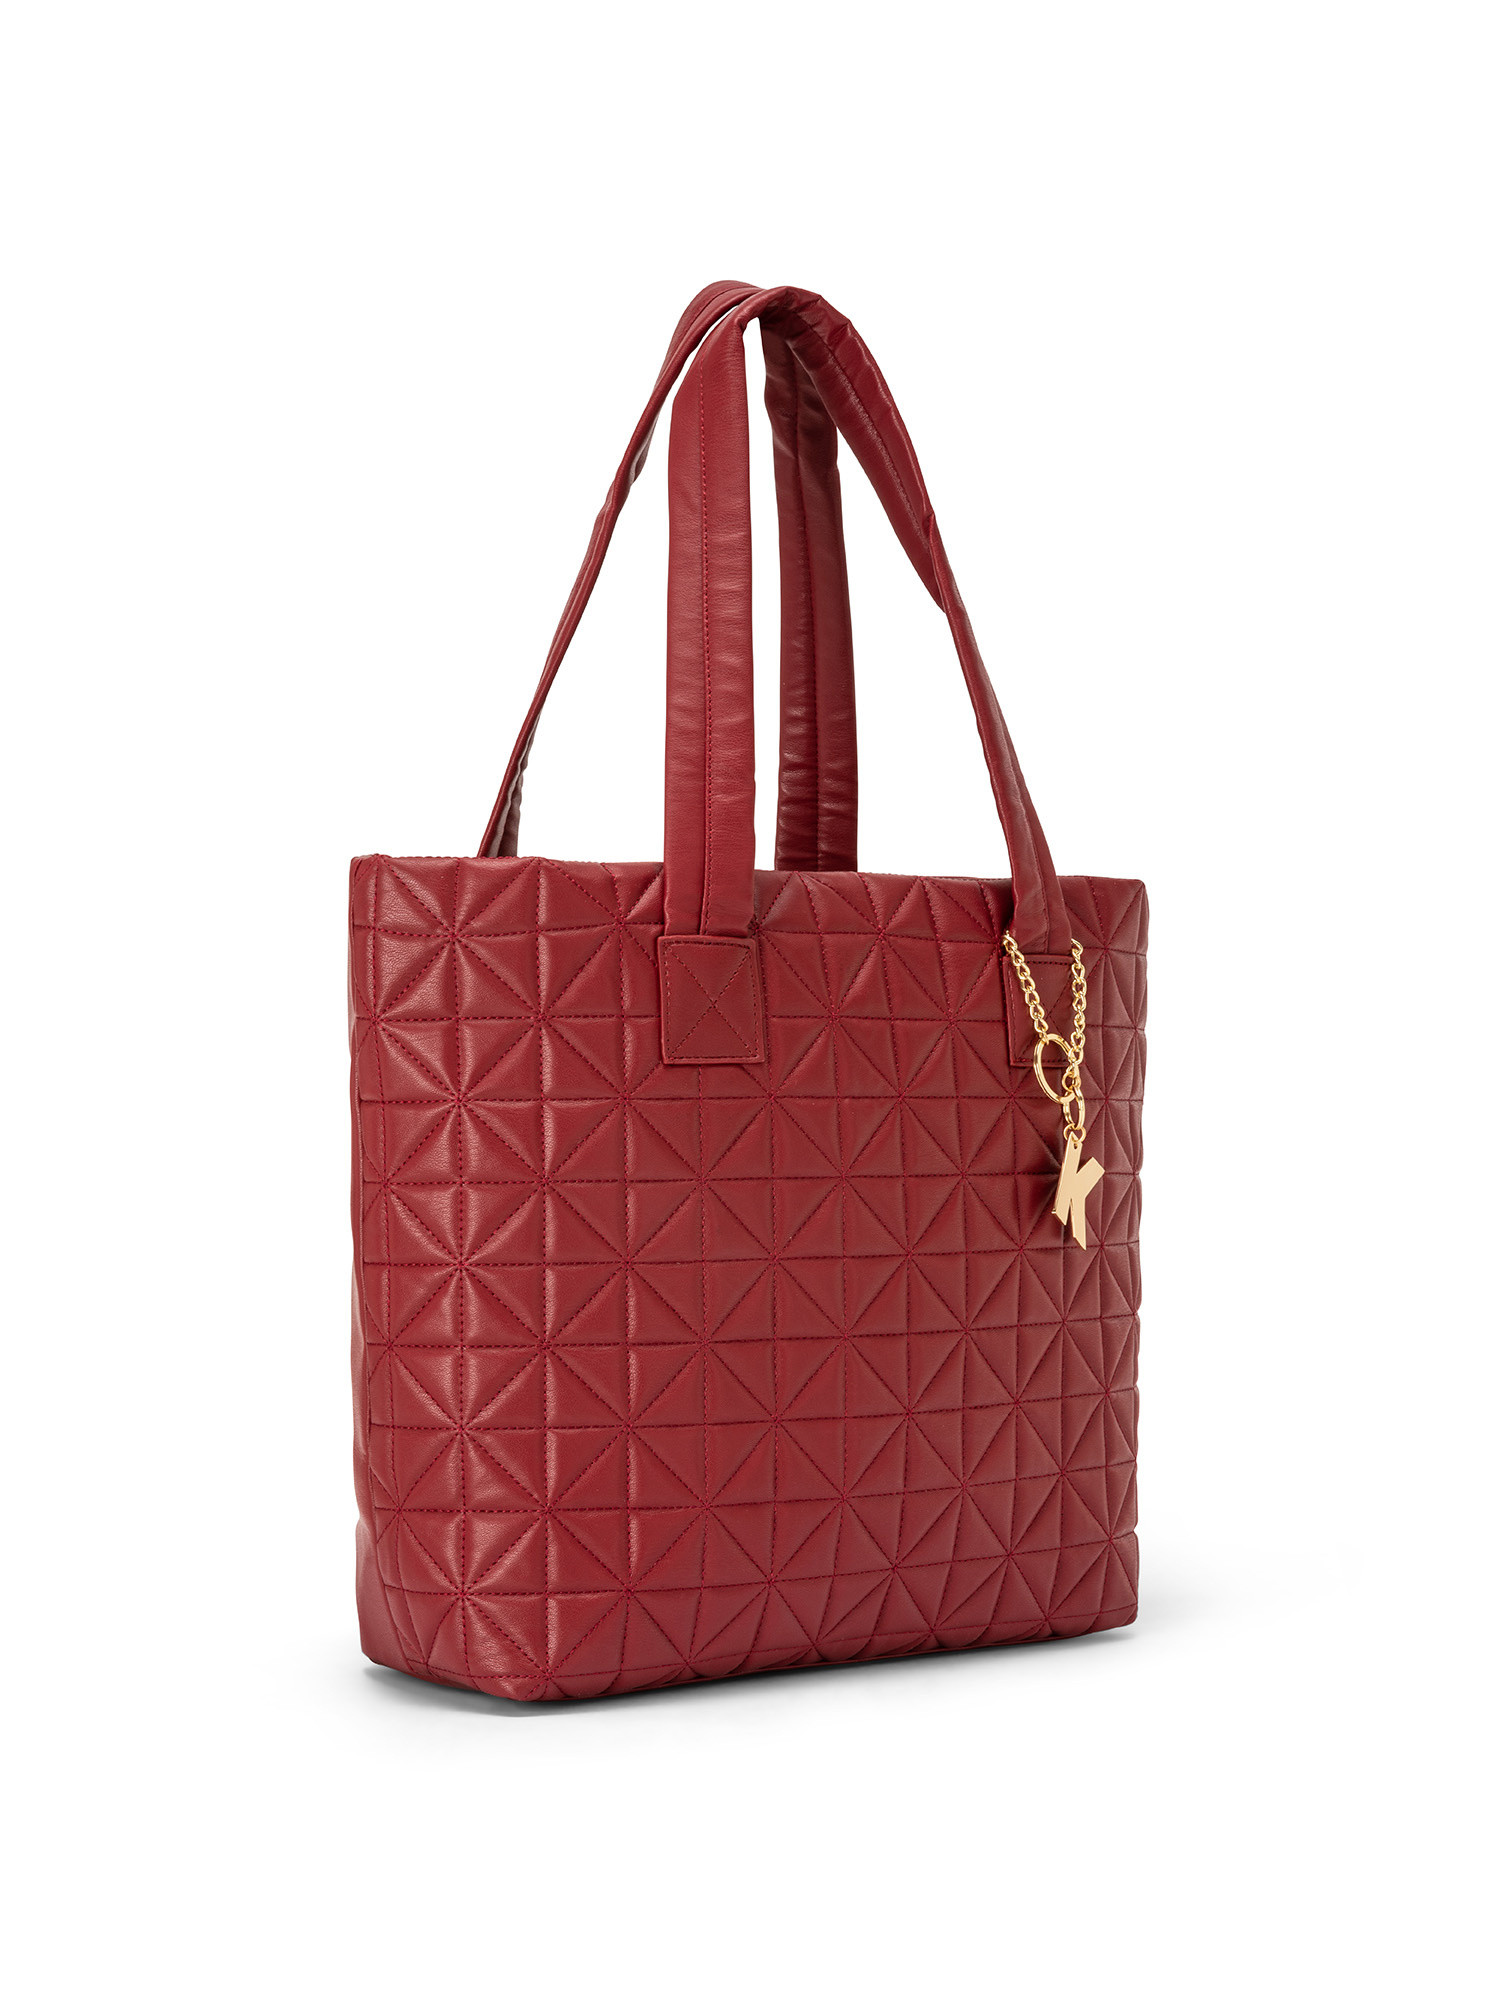 Koan - Shopping bag with motif, Red, large image number 1